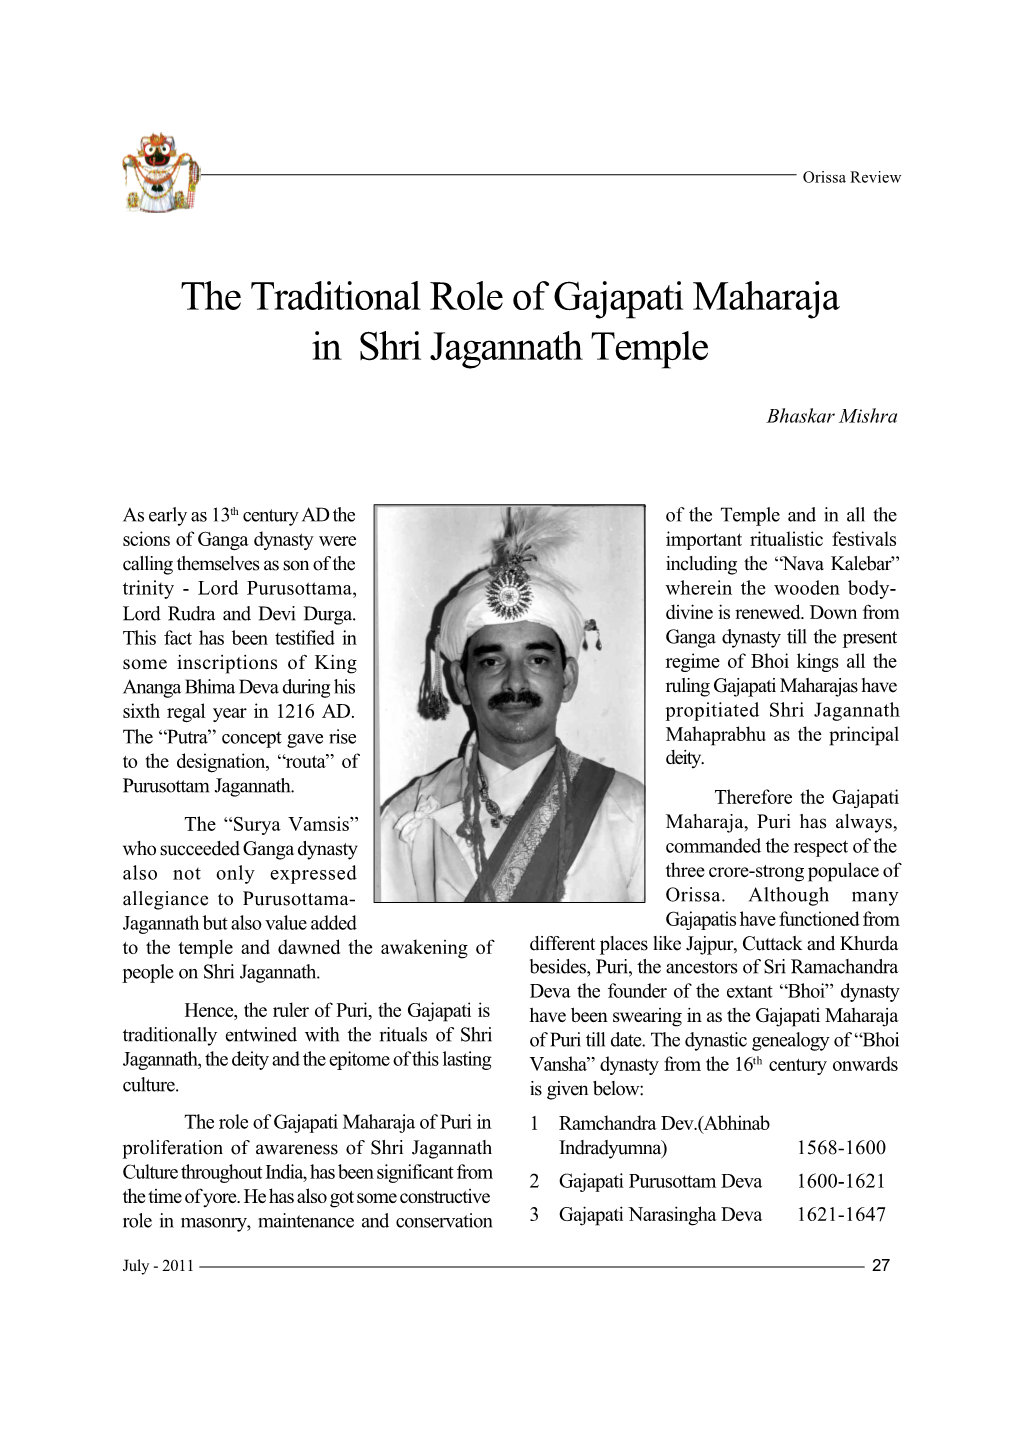 The Traditional Role of Gajapati Maharaja in Shri Jagannath Temple